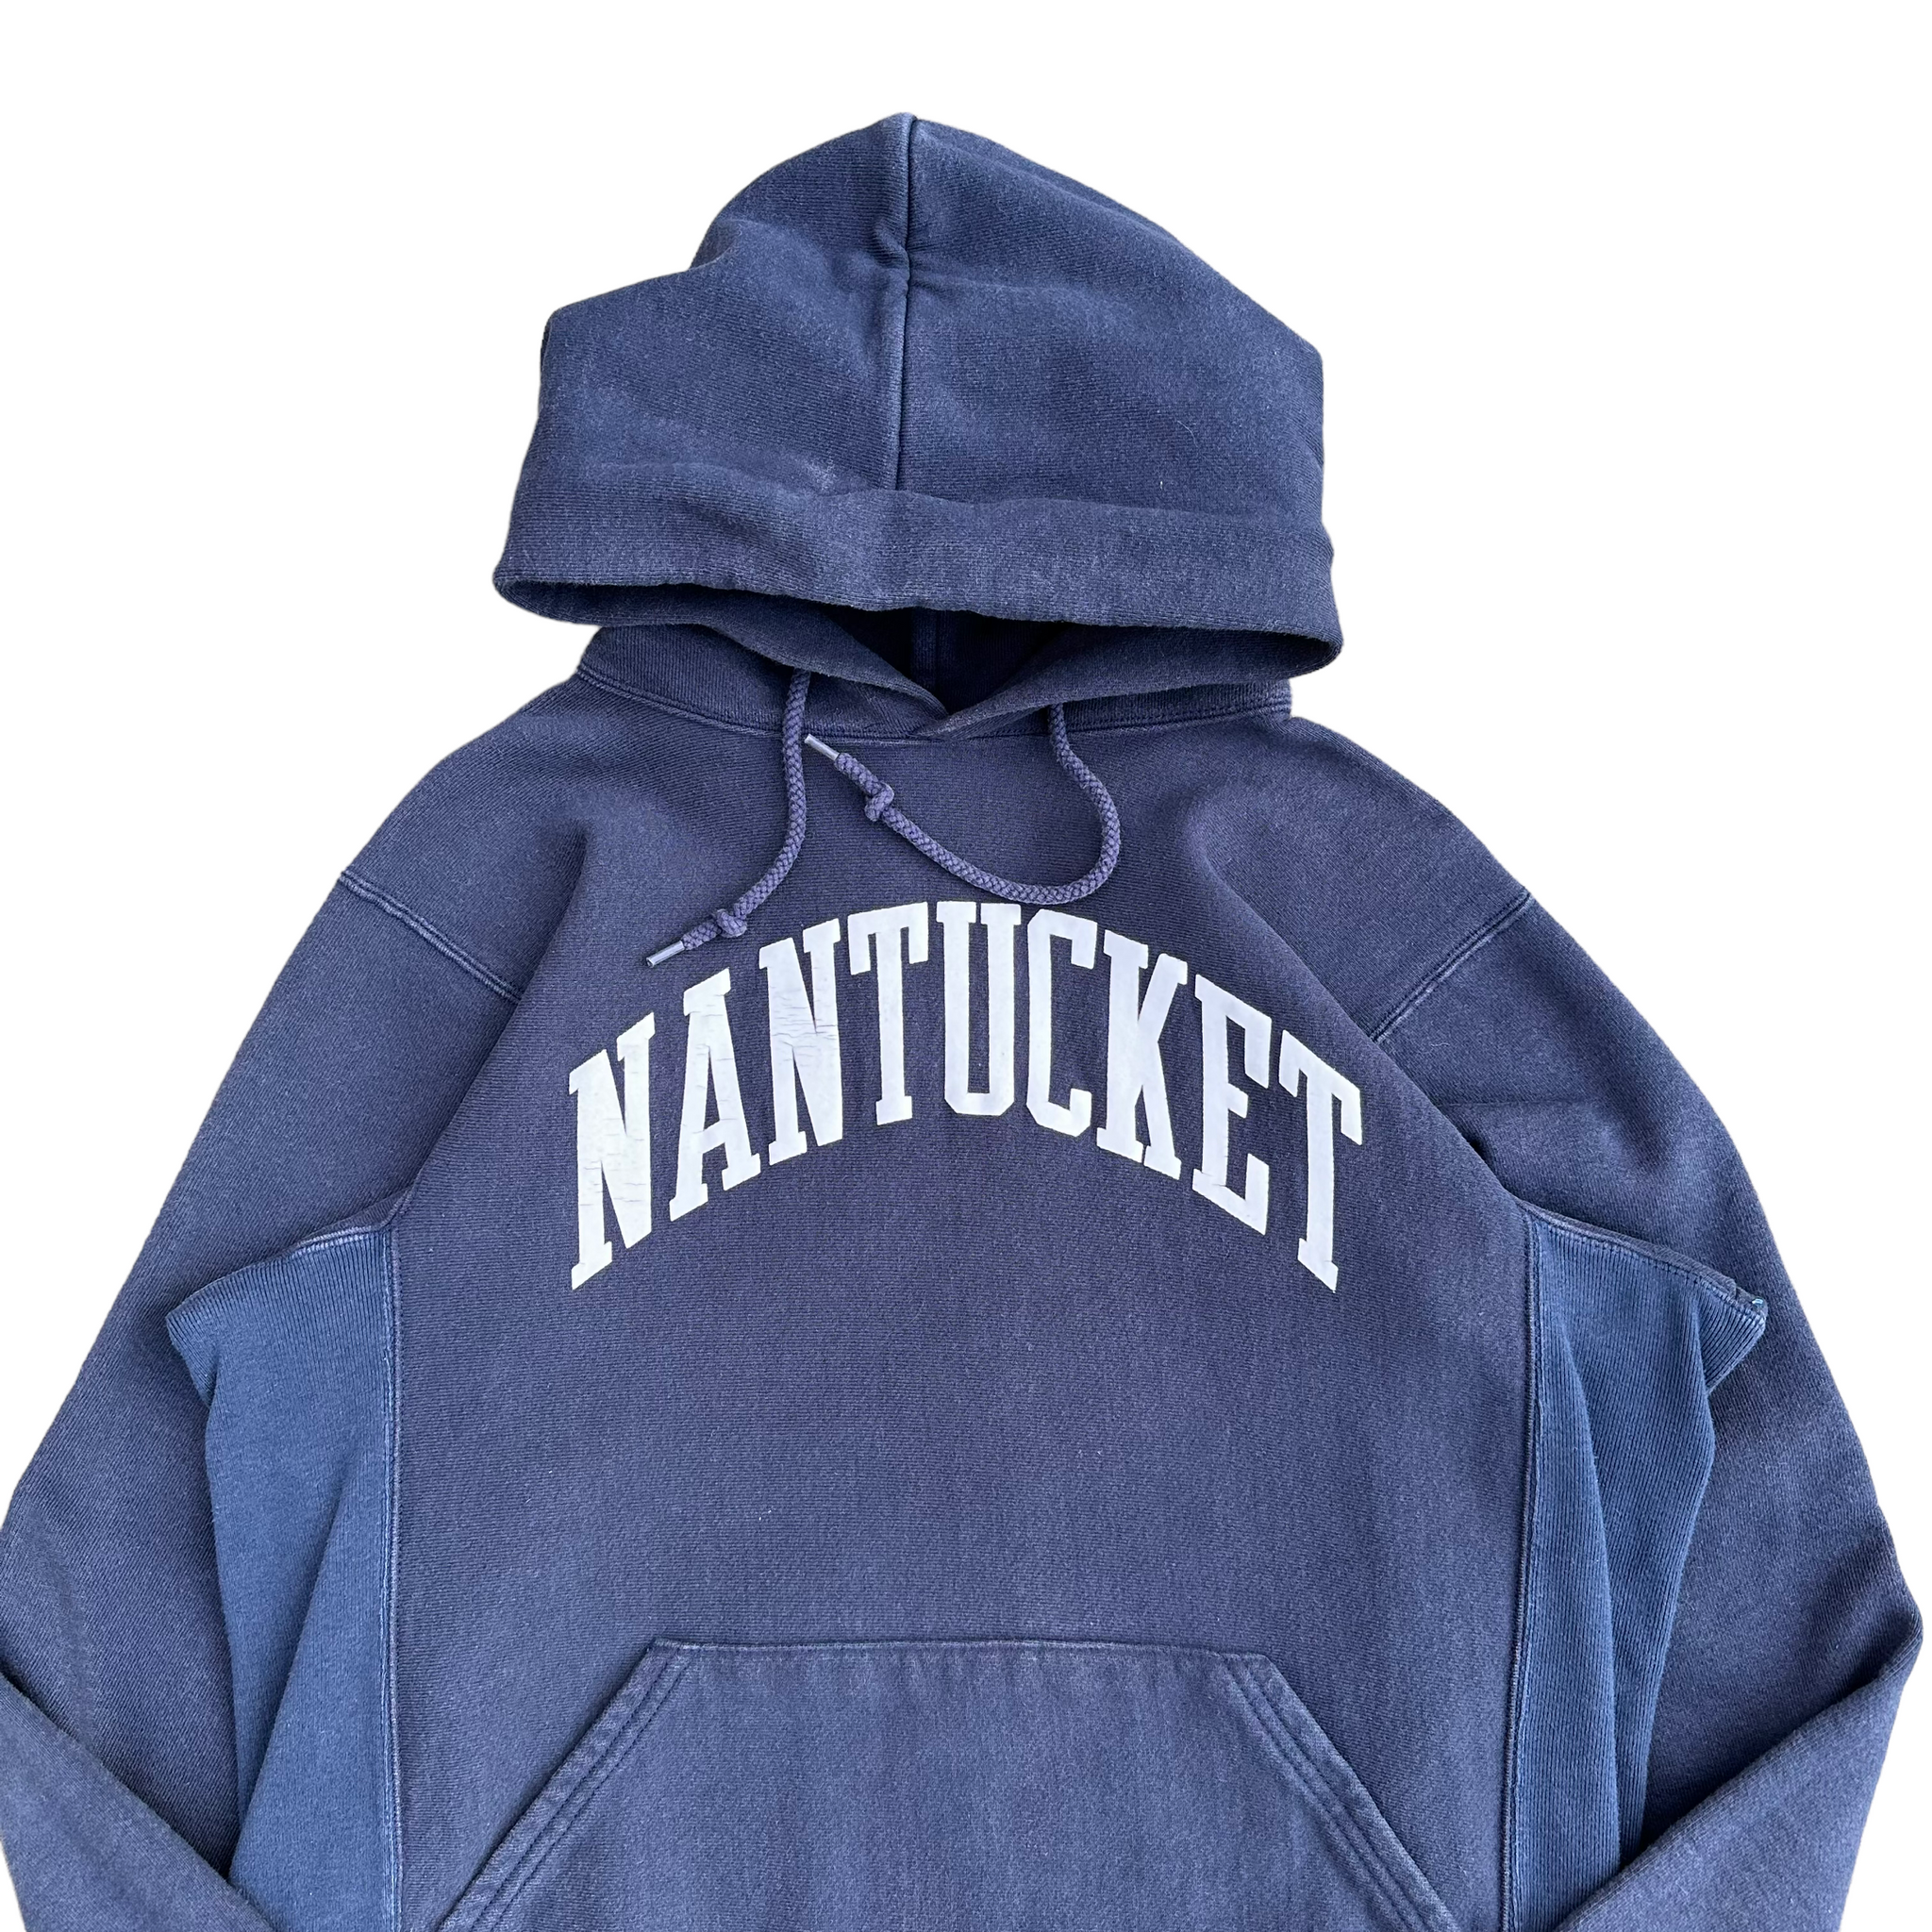 90s Nantucket hood -Highest qualit Made in usa🇺🇸  medium